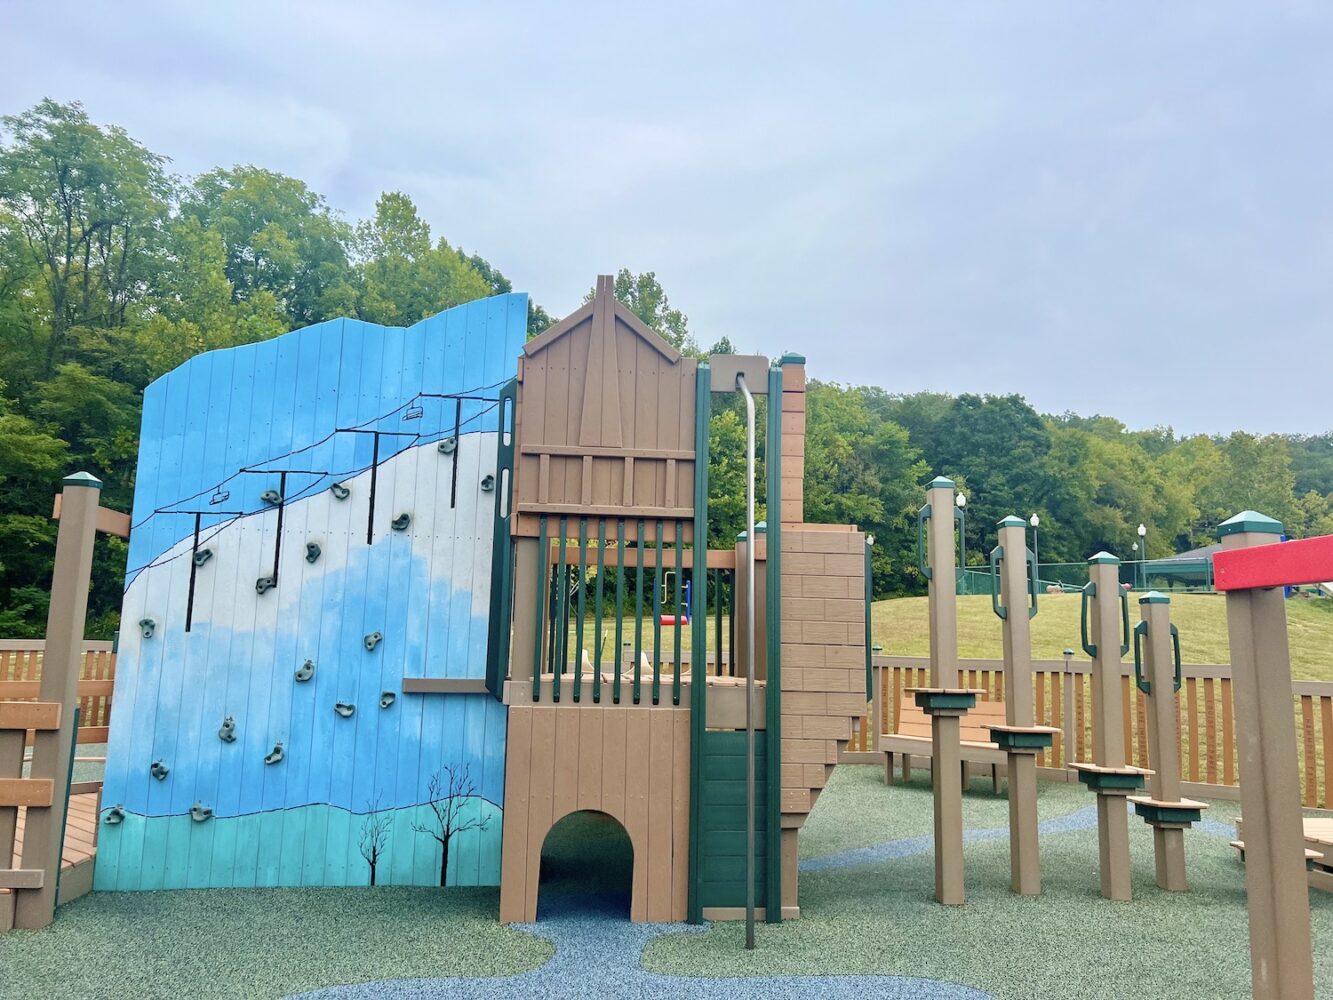 PLAYoli Playground - Paoli Community Park in Paoli, Indiana